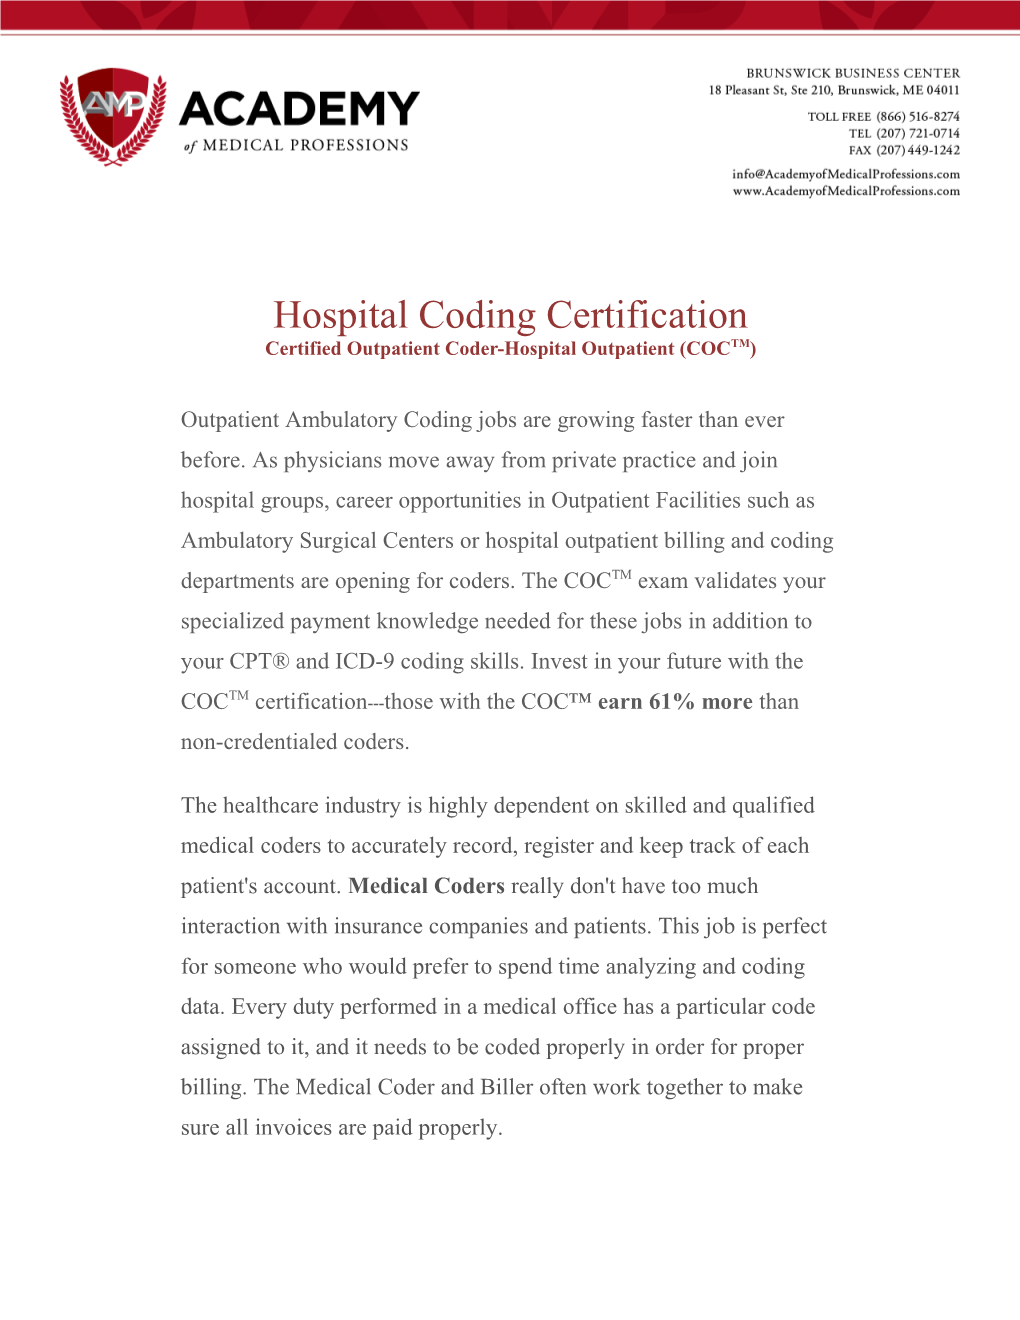 Certified Outpatient Coder-Hospital Outpatient (COCTM)